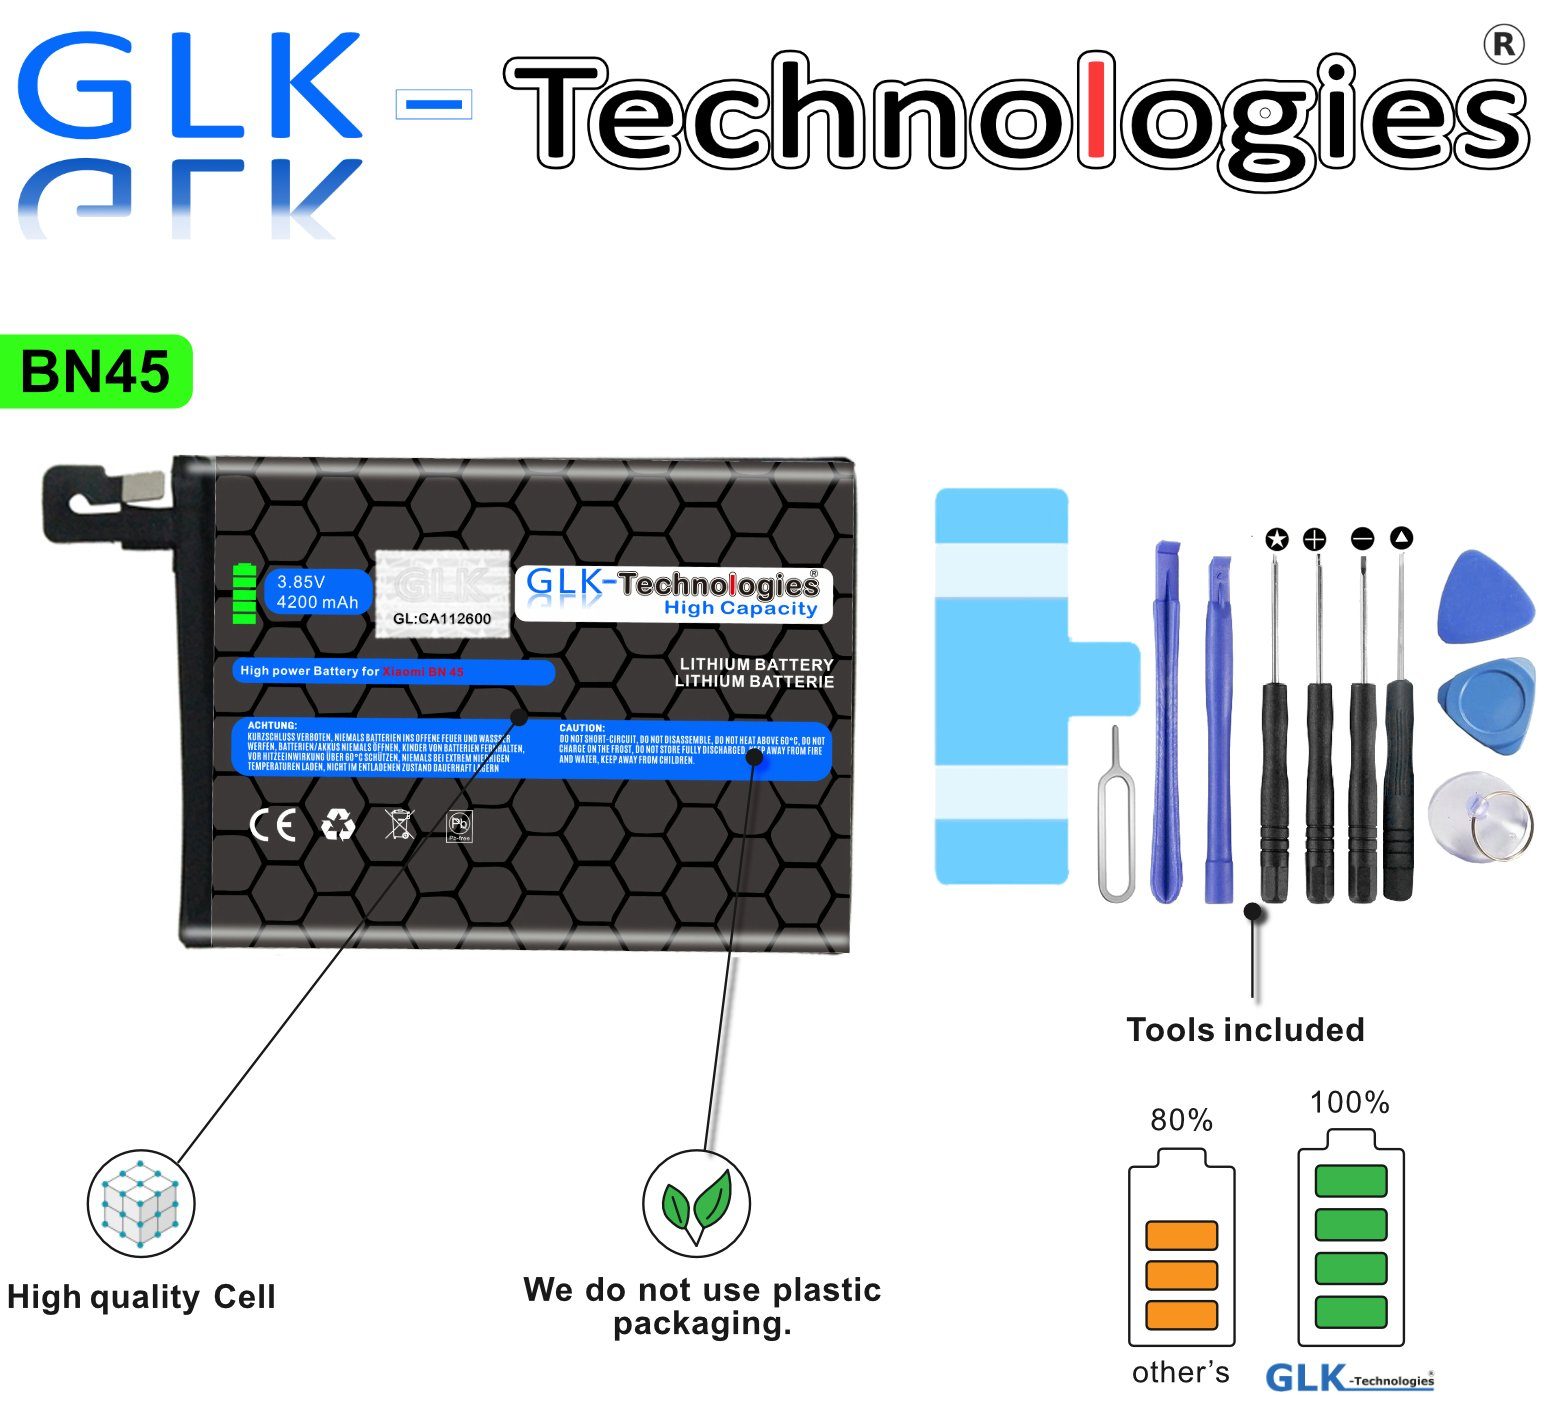 GLK-Technologies High Power Ersatzakku BN45 für Xiaomi Mi Note 2 Redmi Note 5, Original GLK-Technologies Battery, accu, 4200mAh Akku, inkl. Werkzeug Set Kit NEU Smartphone-Akku 4200 mAh (3.8 V)